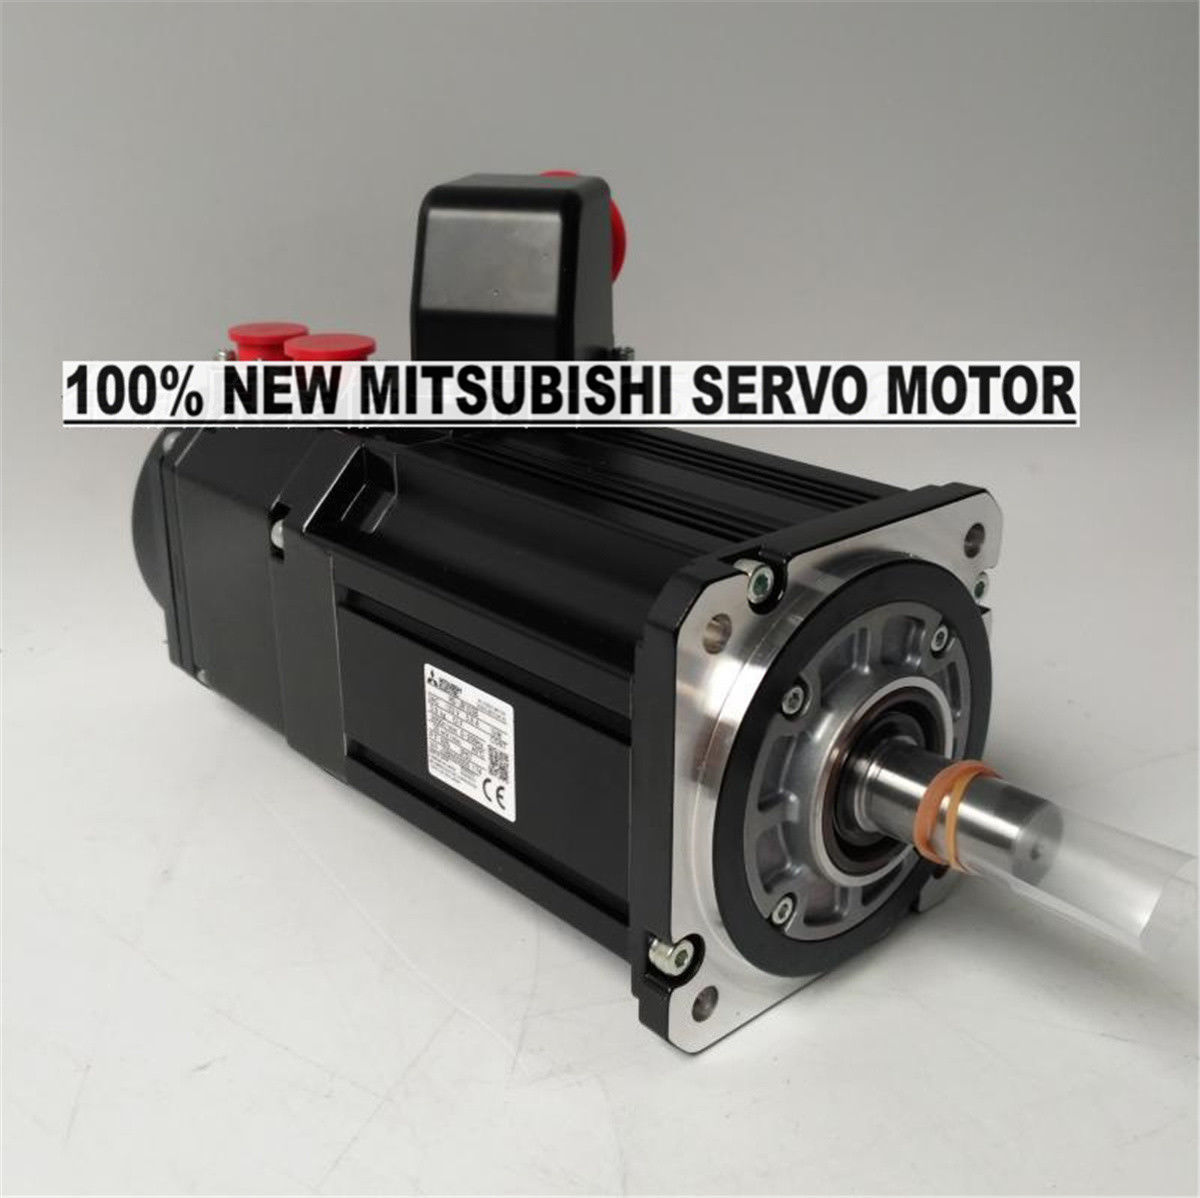 Brand NEW Mitsubishi Servo Motor HG-JR103B in box HGJR103B - zum Schließen ins Bild klicken